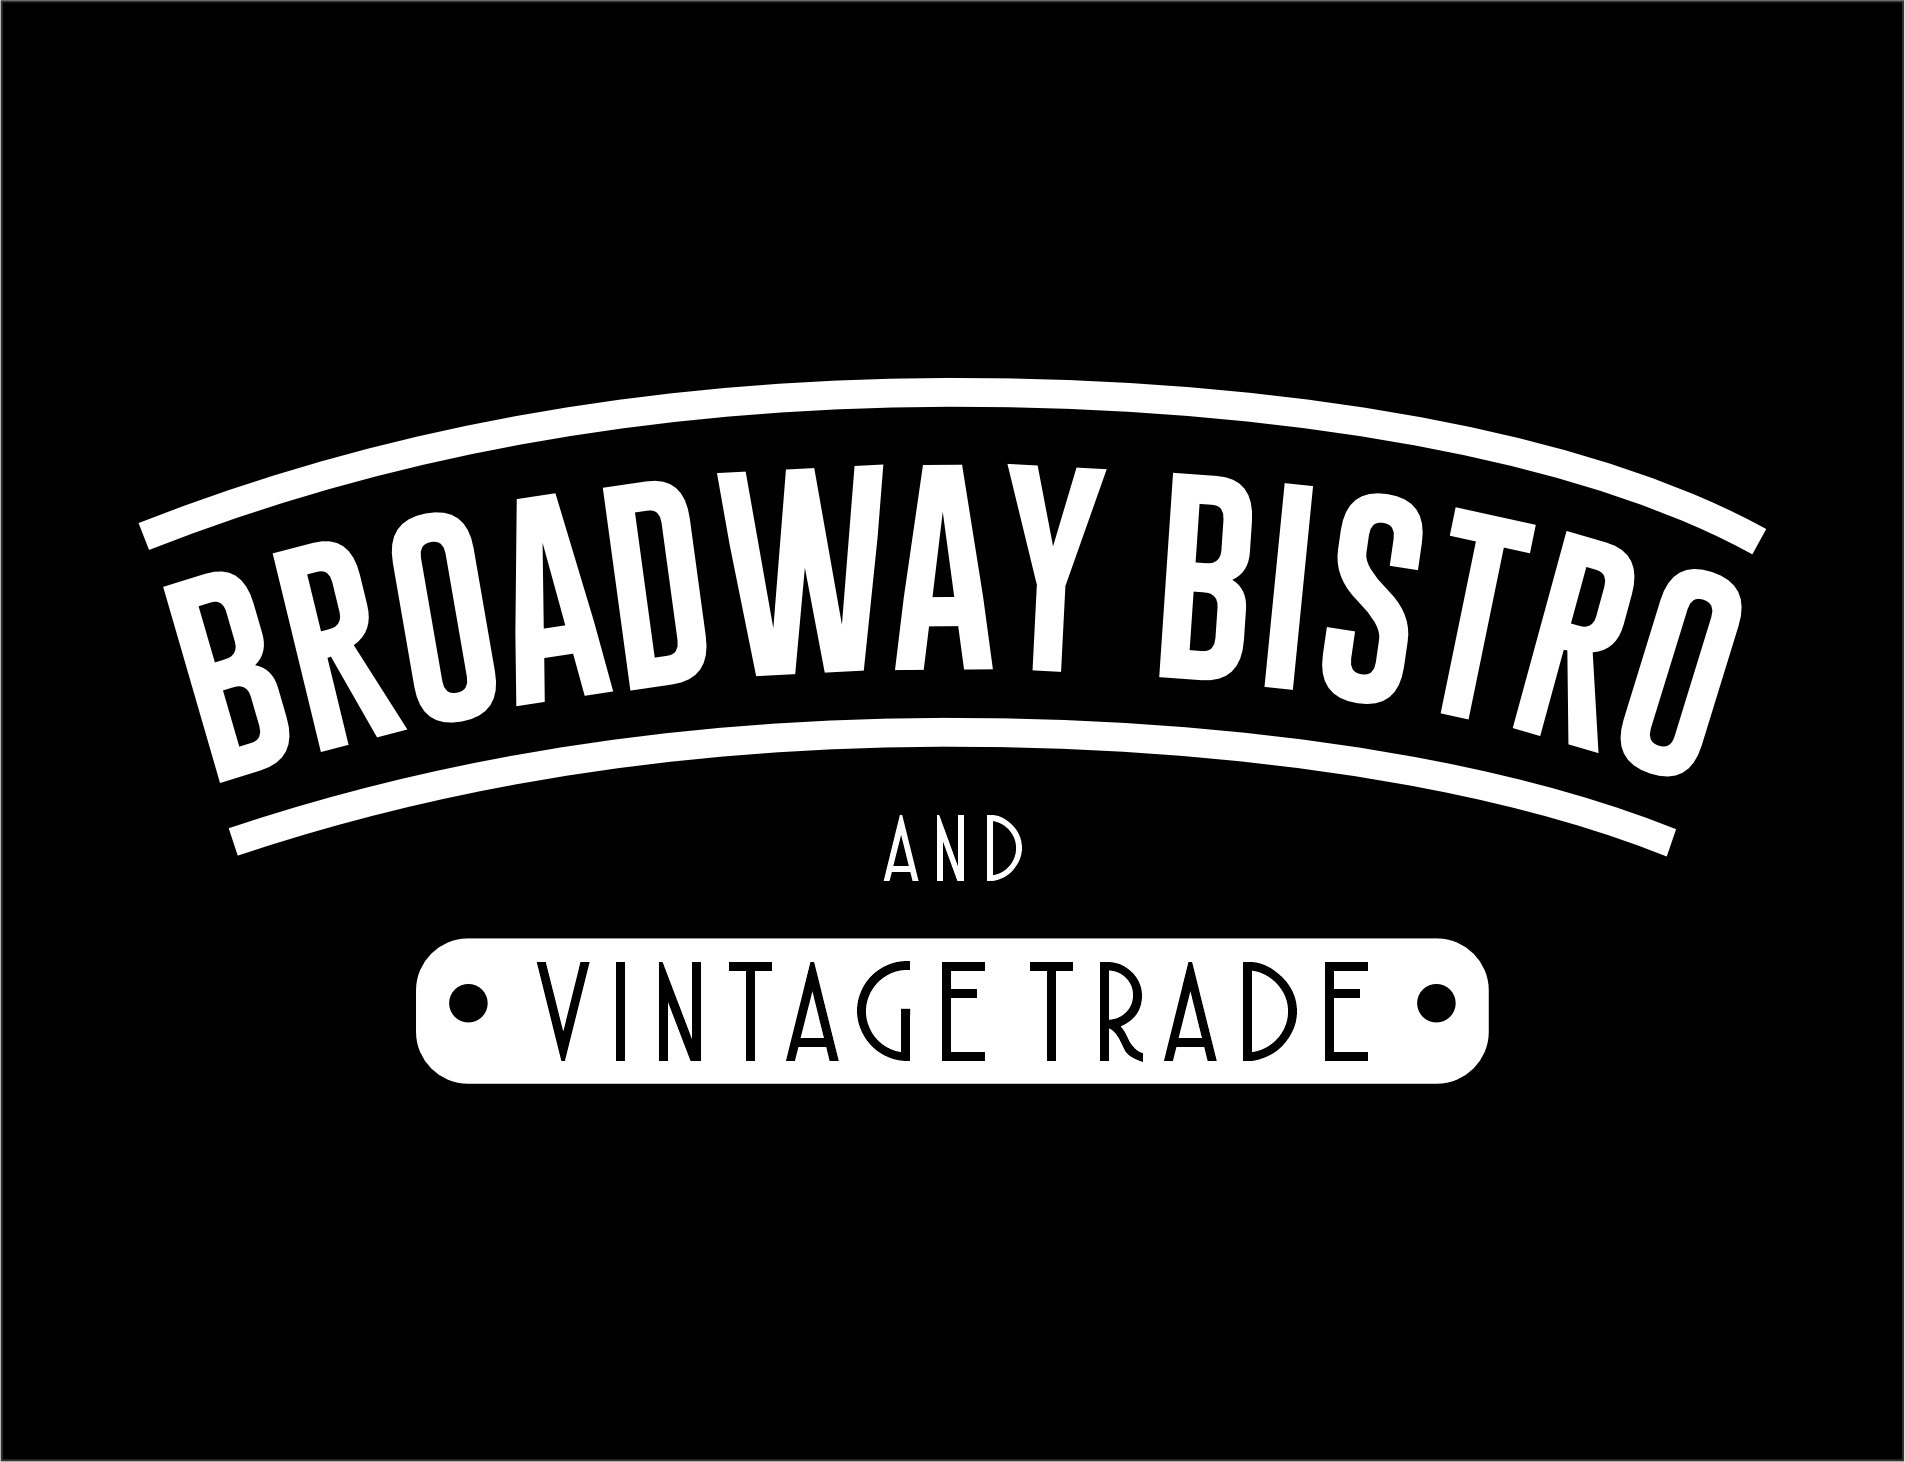 Broadway Bistro & Vintage Trade